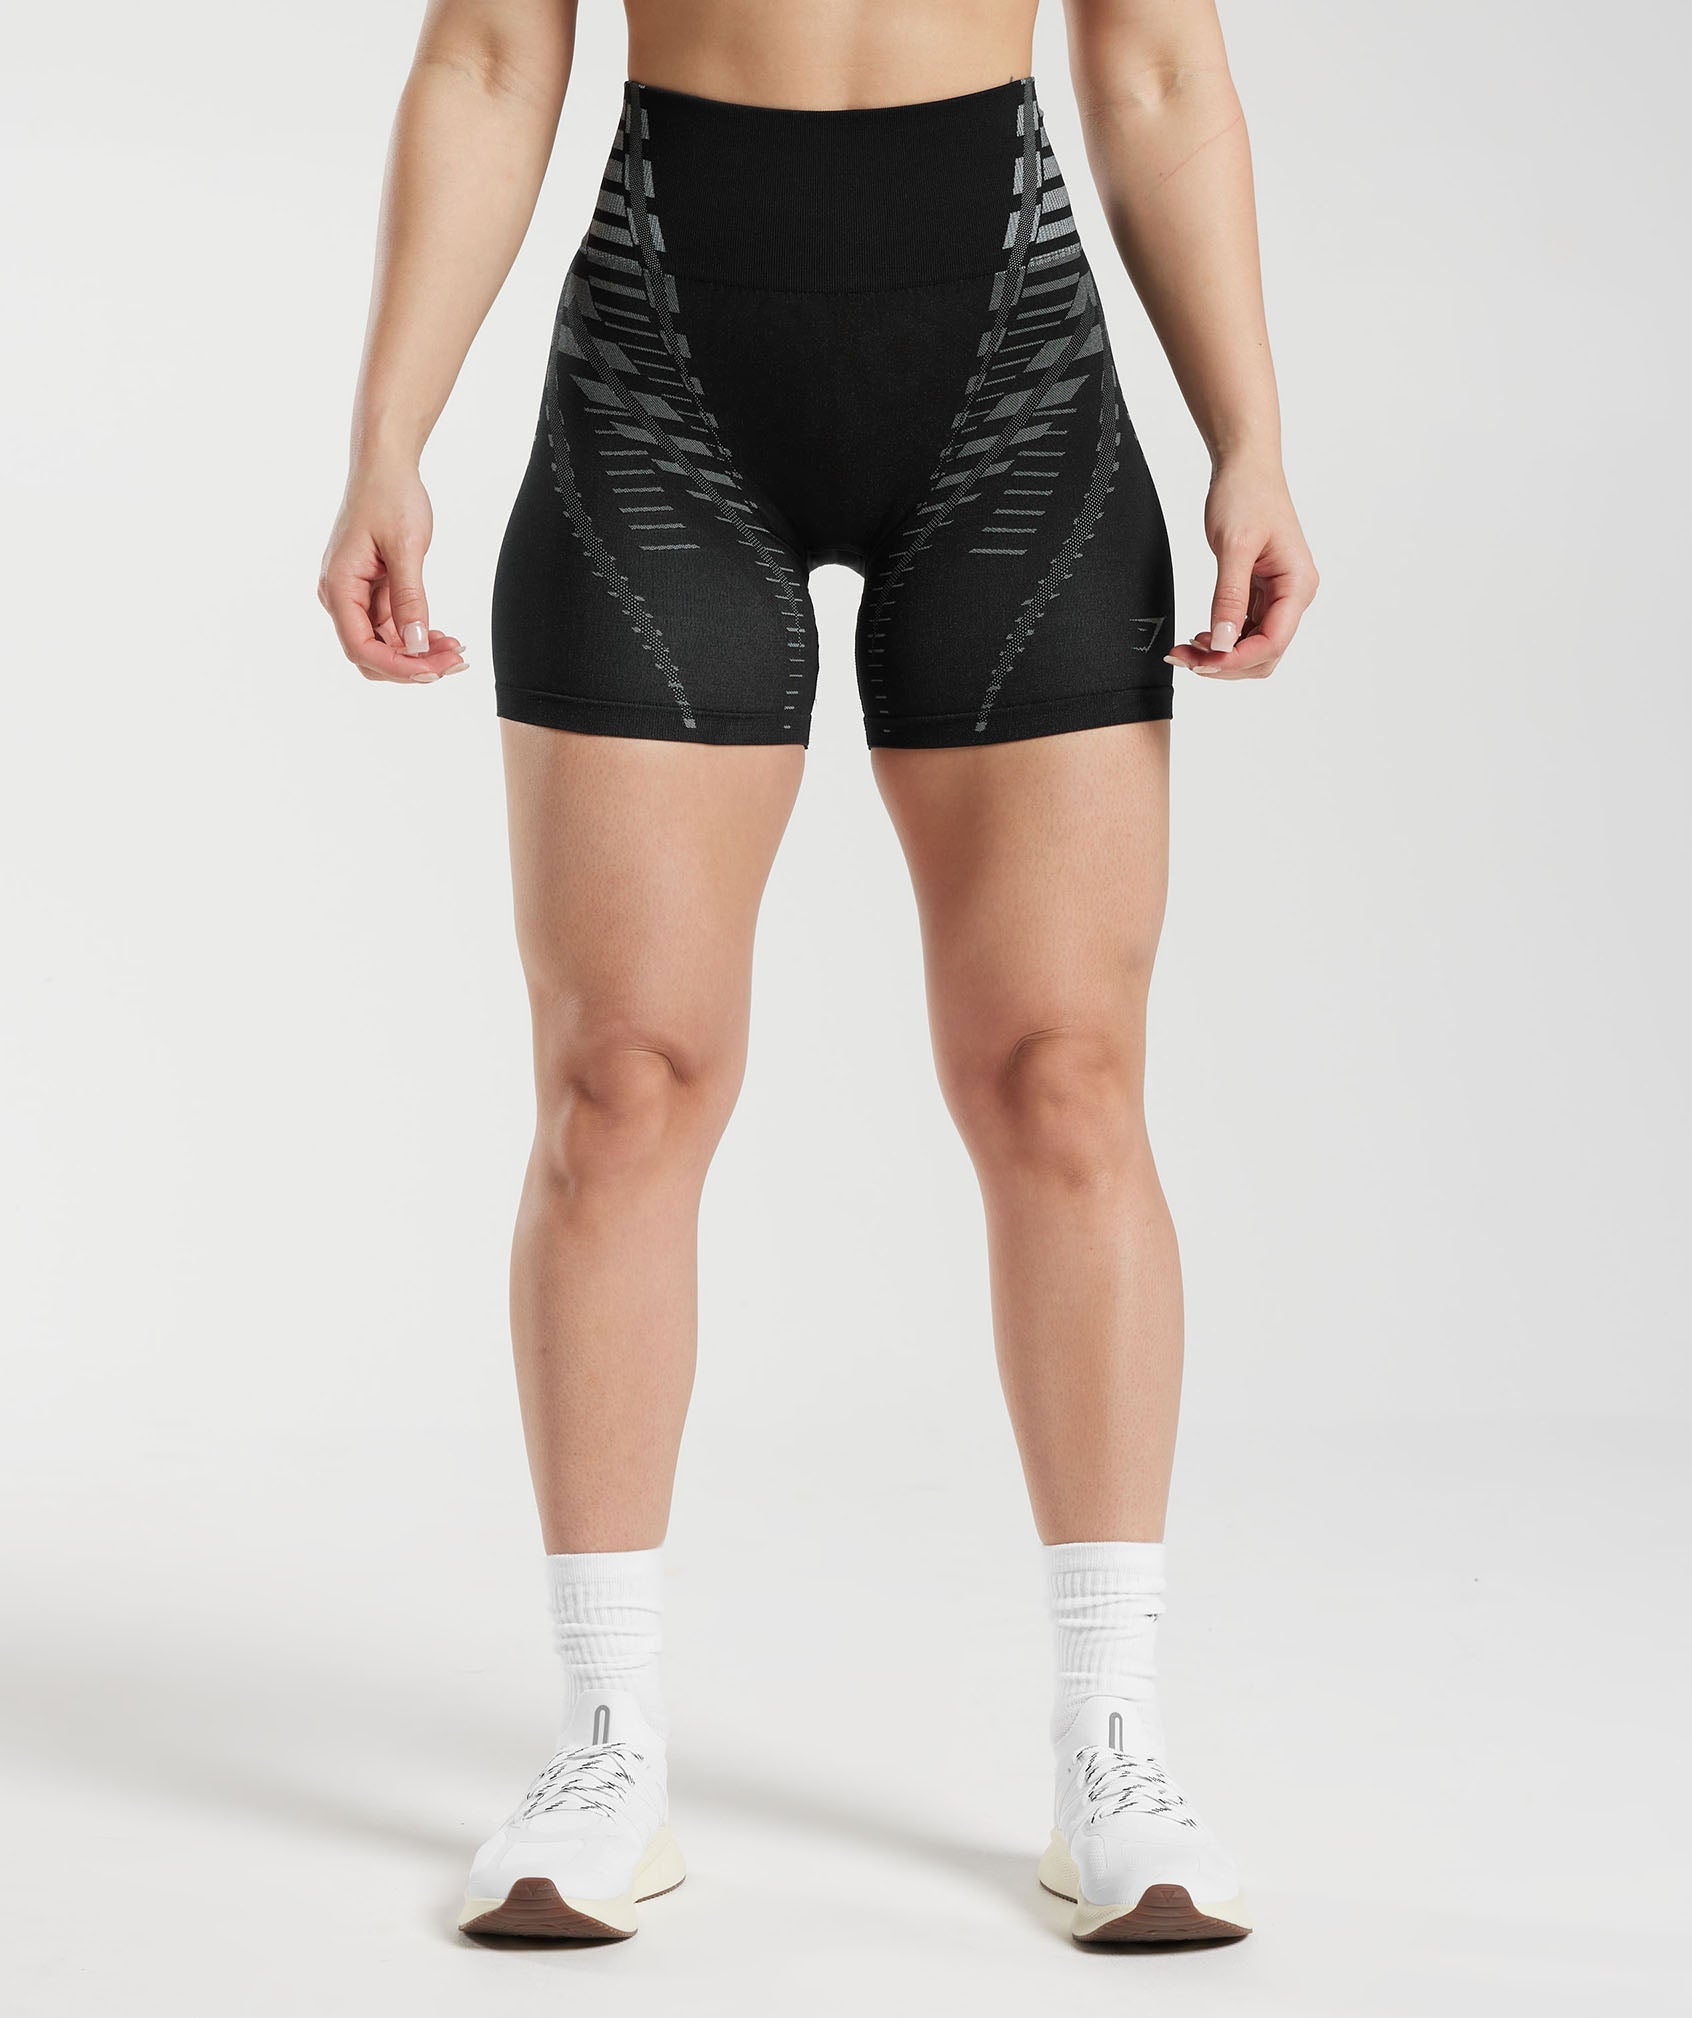 Gymshark Apex Limit Shorts - Black/Light Grey | Gymshark